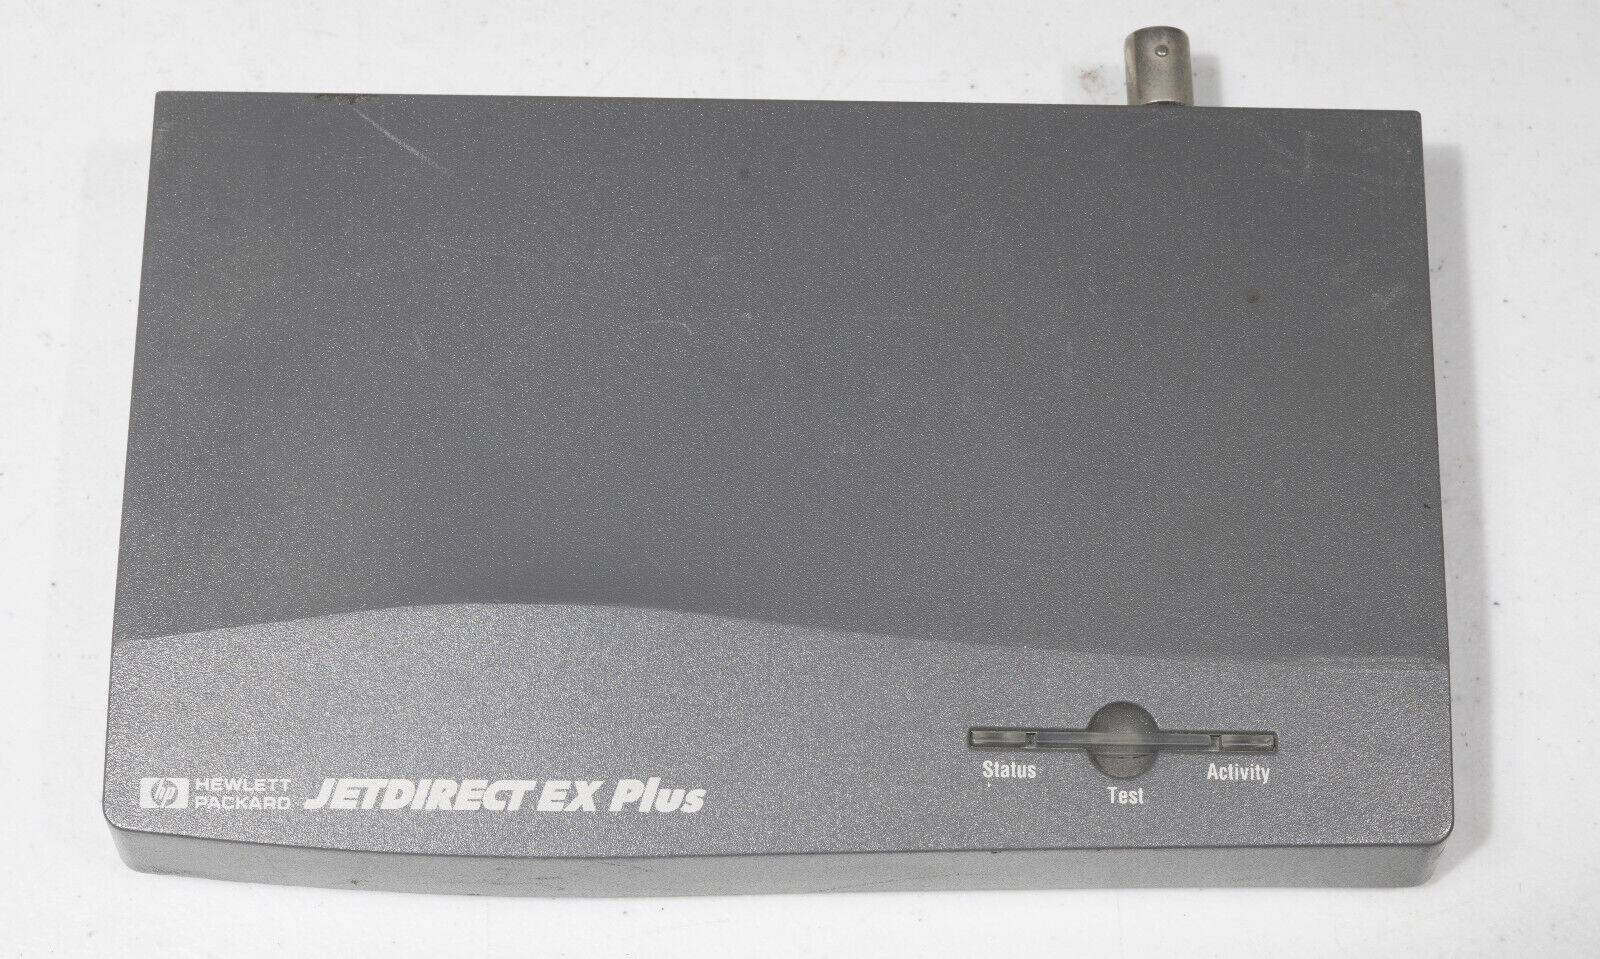 Vintage HP Jetdirect EX Plus external network print server